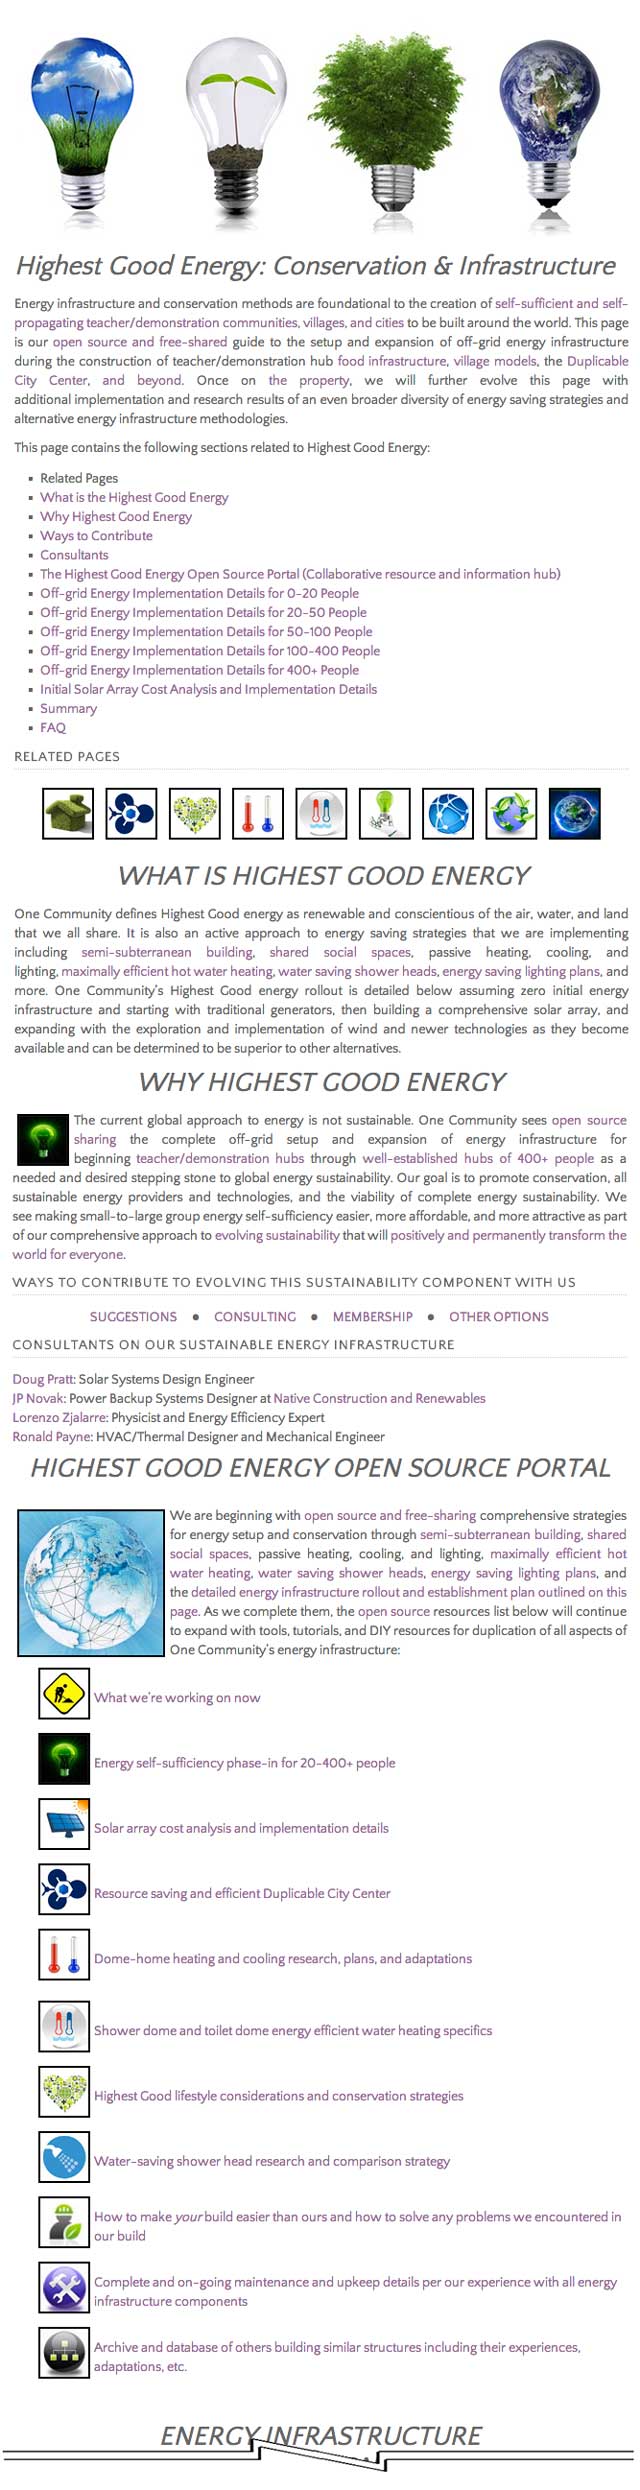 Highest Good Energy, One Community